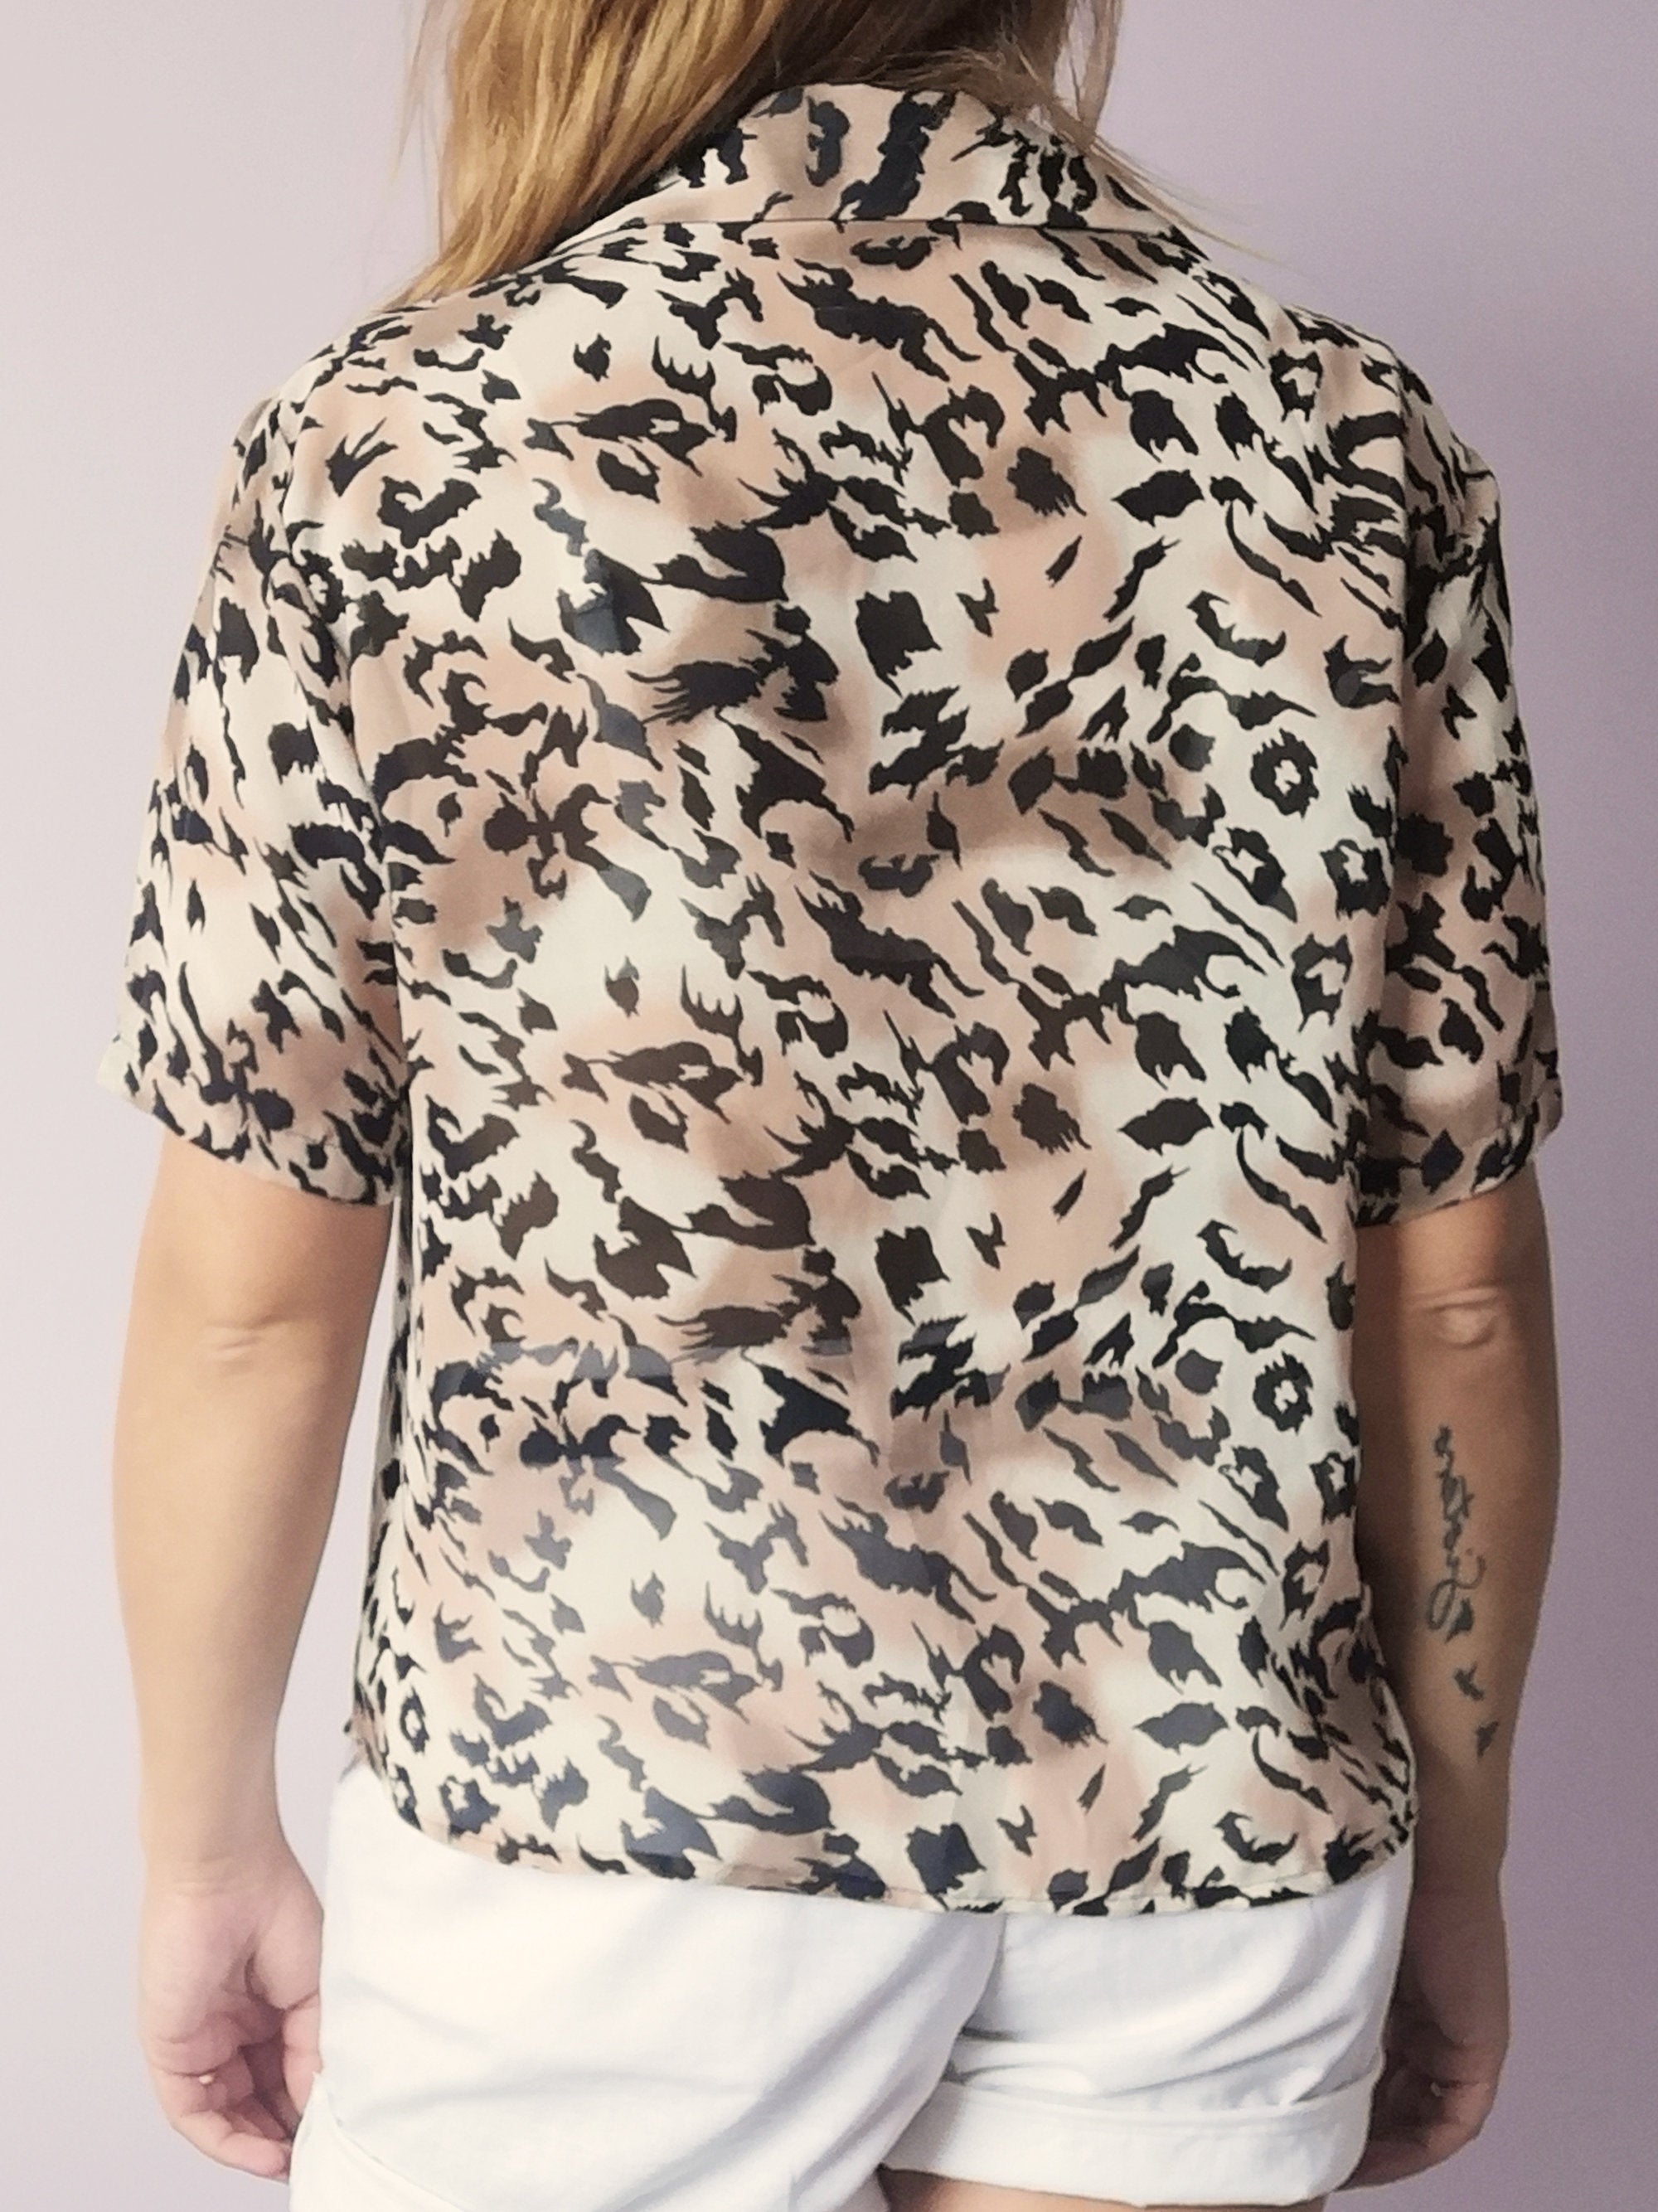 Vintage 80s animal print sheer blouse shirt top